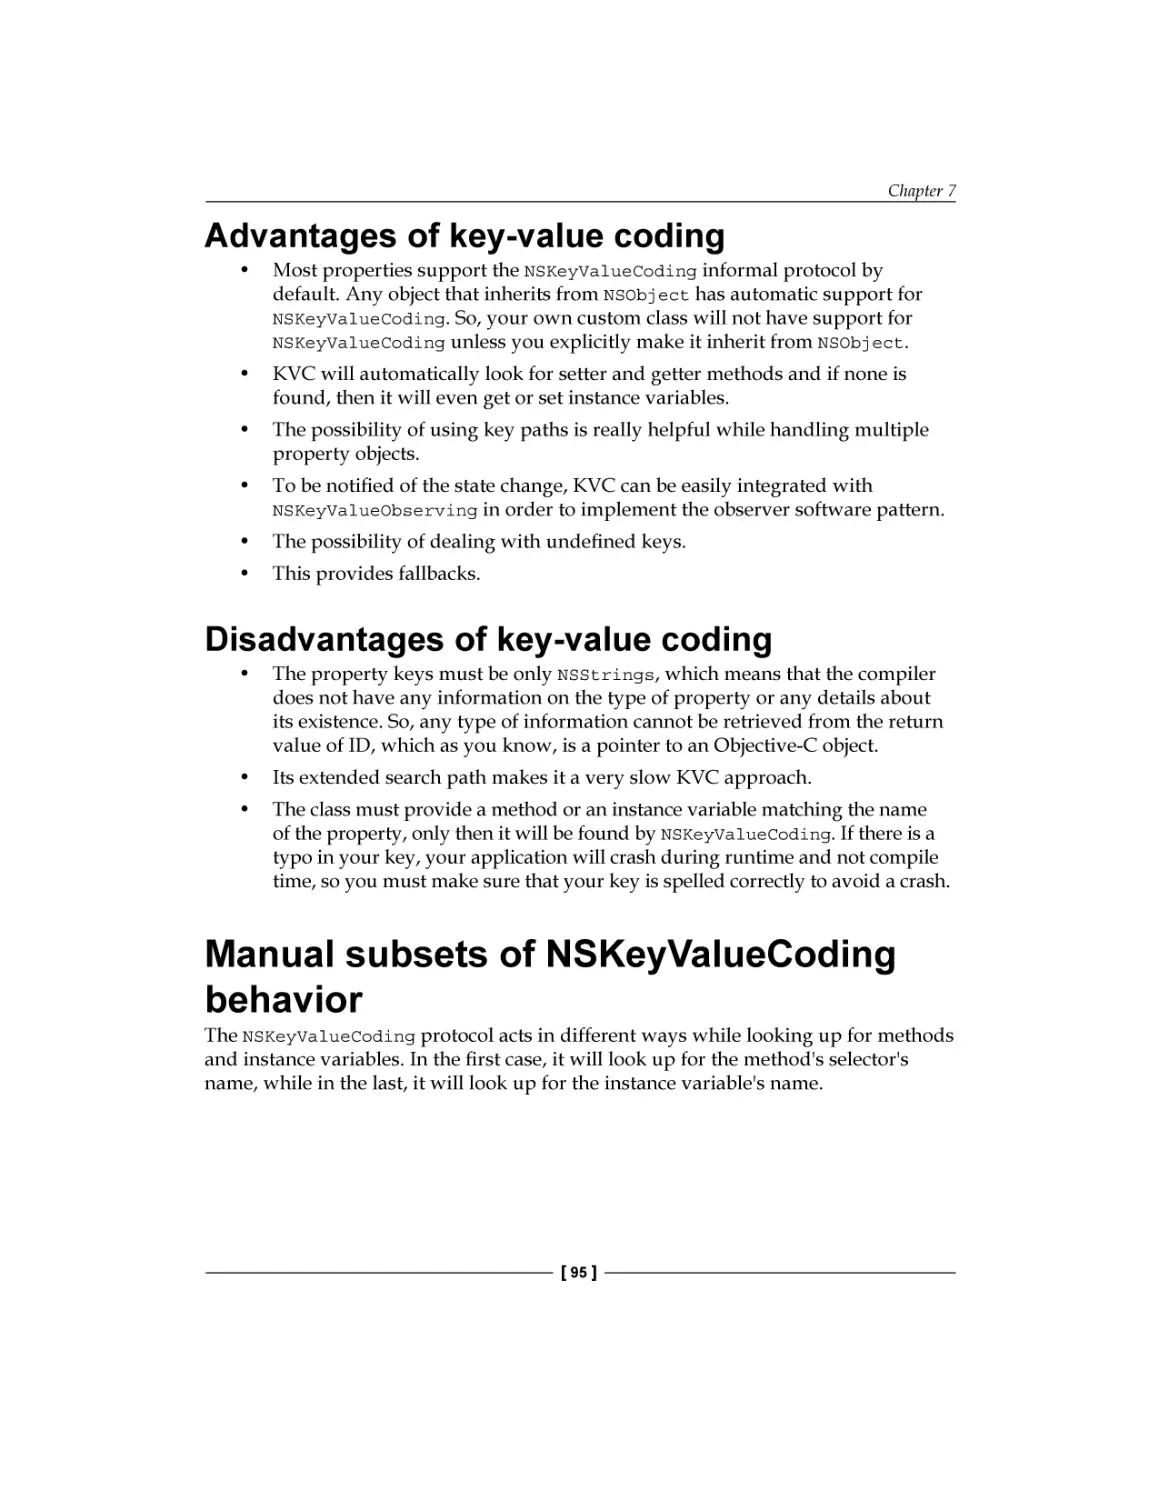 Advantages of key-value coding
Disadvantages of key-value coding
Manual subsets of NSKeyValueCoding behavior